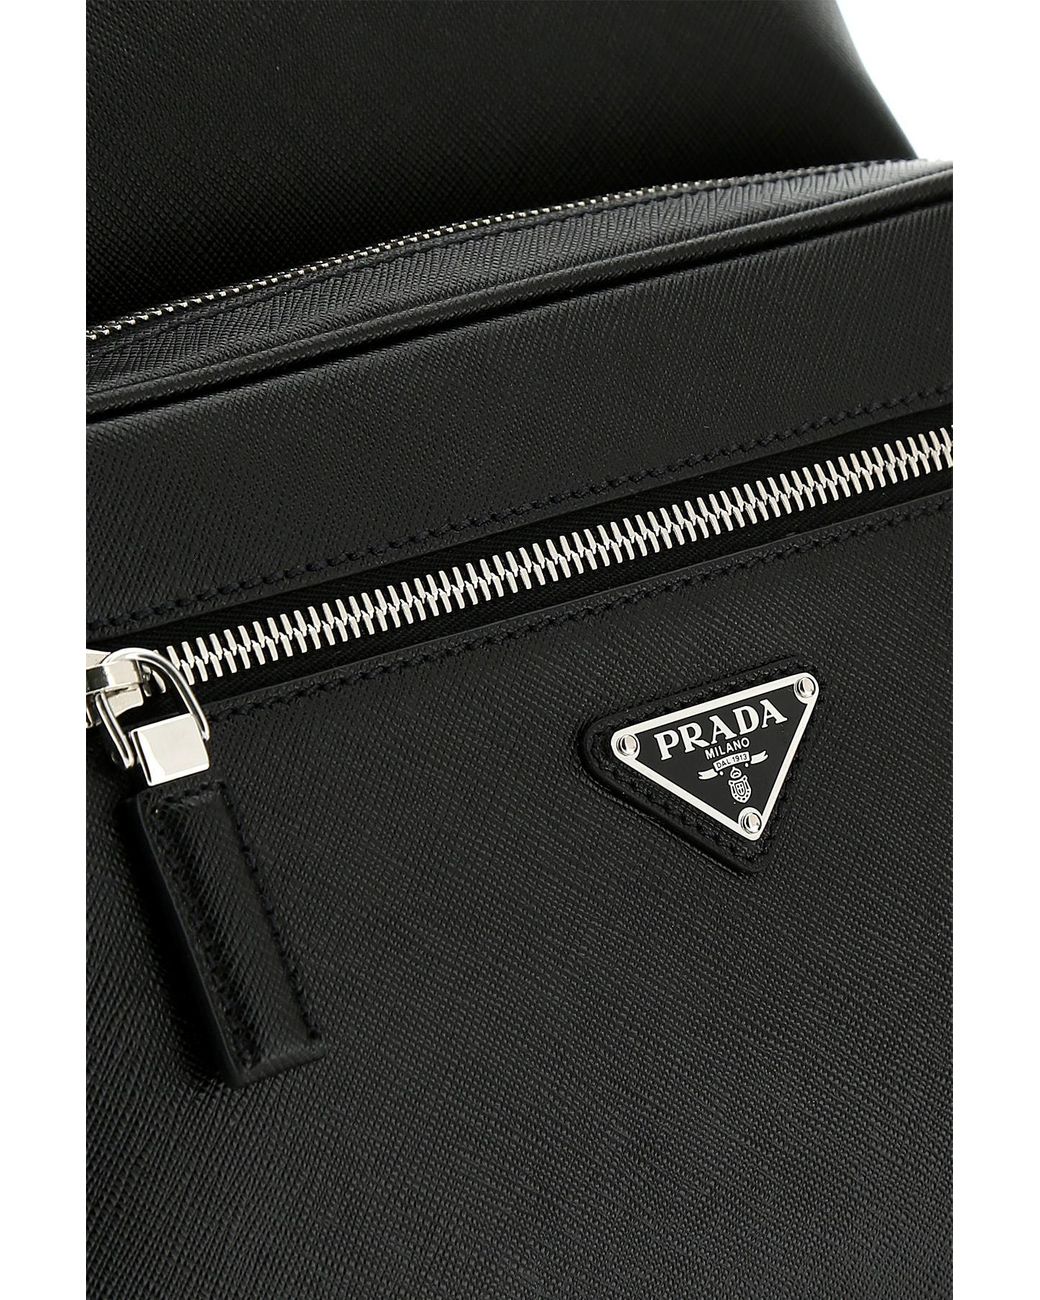 Prada Saffiano Leather Backpack in Black for Men | Lyst Australia